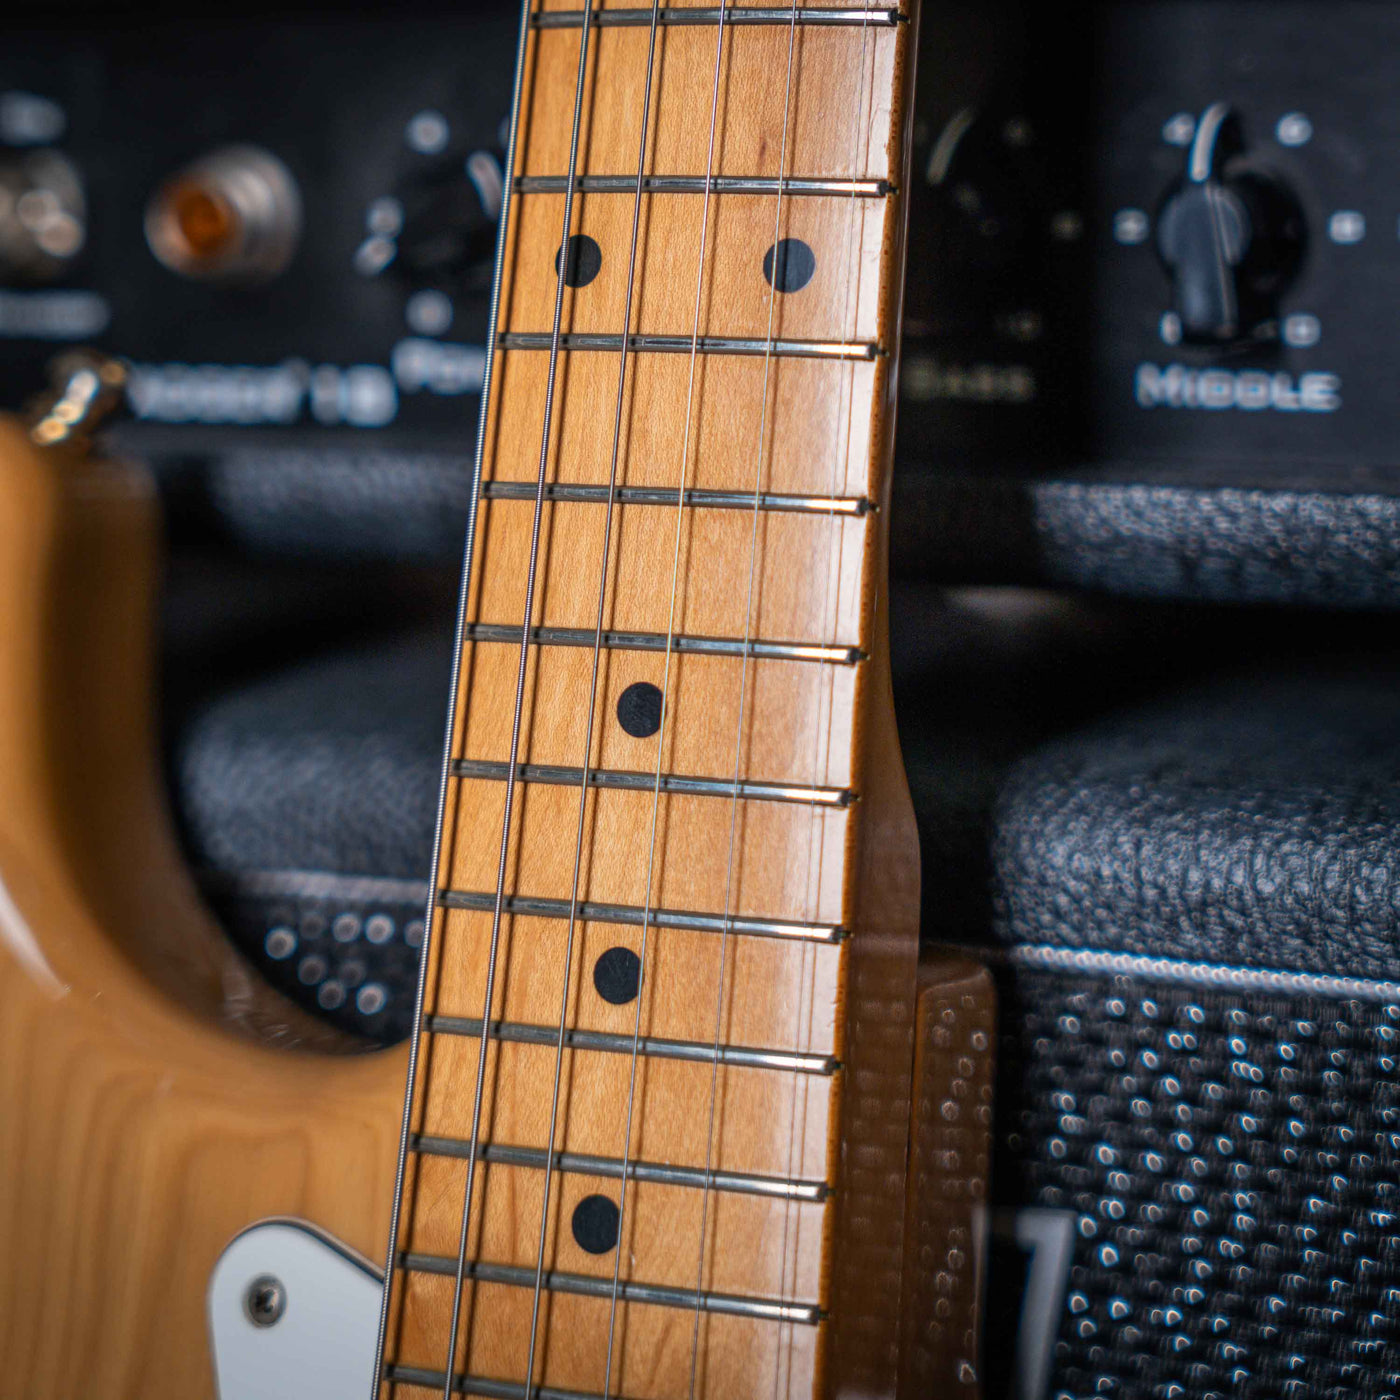 Fender Stratocastar MIJ Traditional 70s